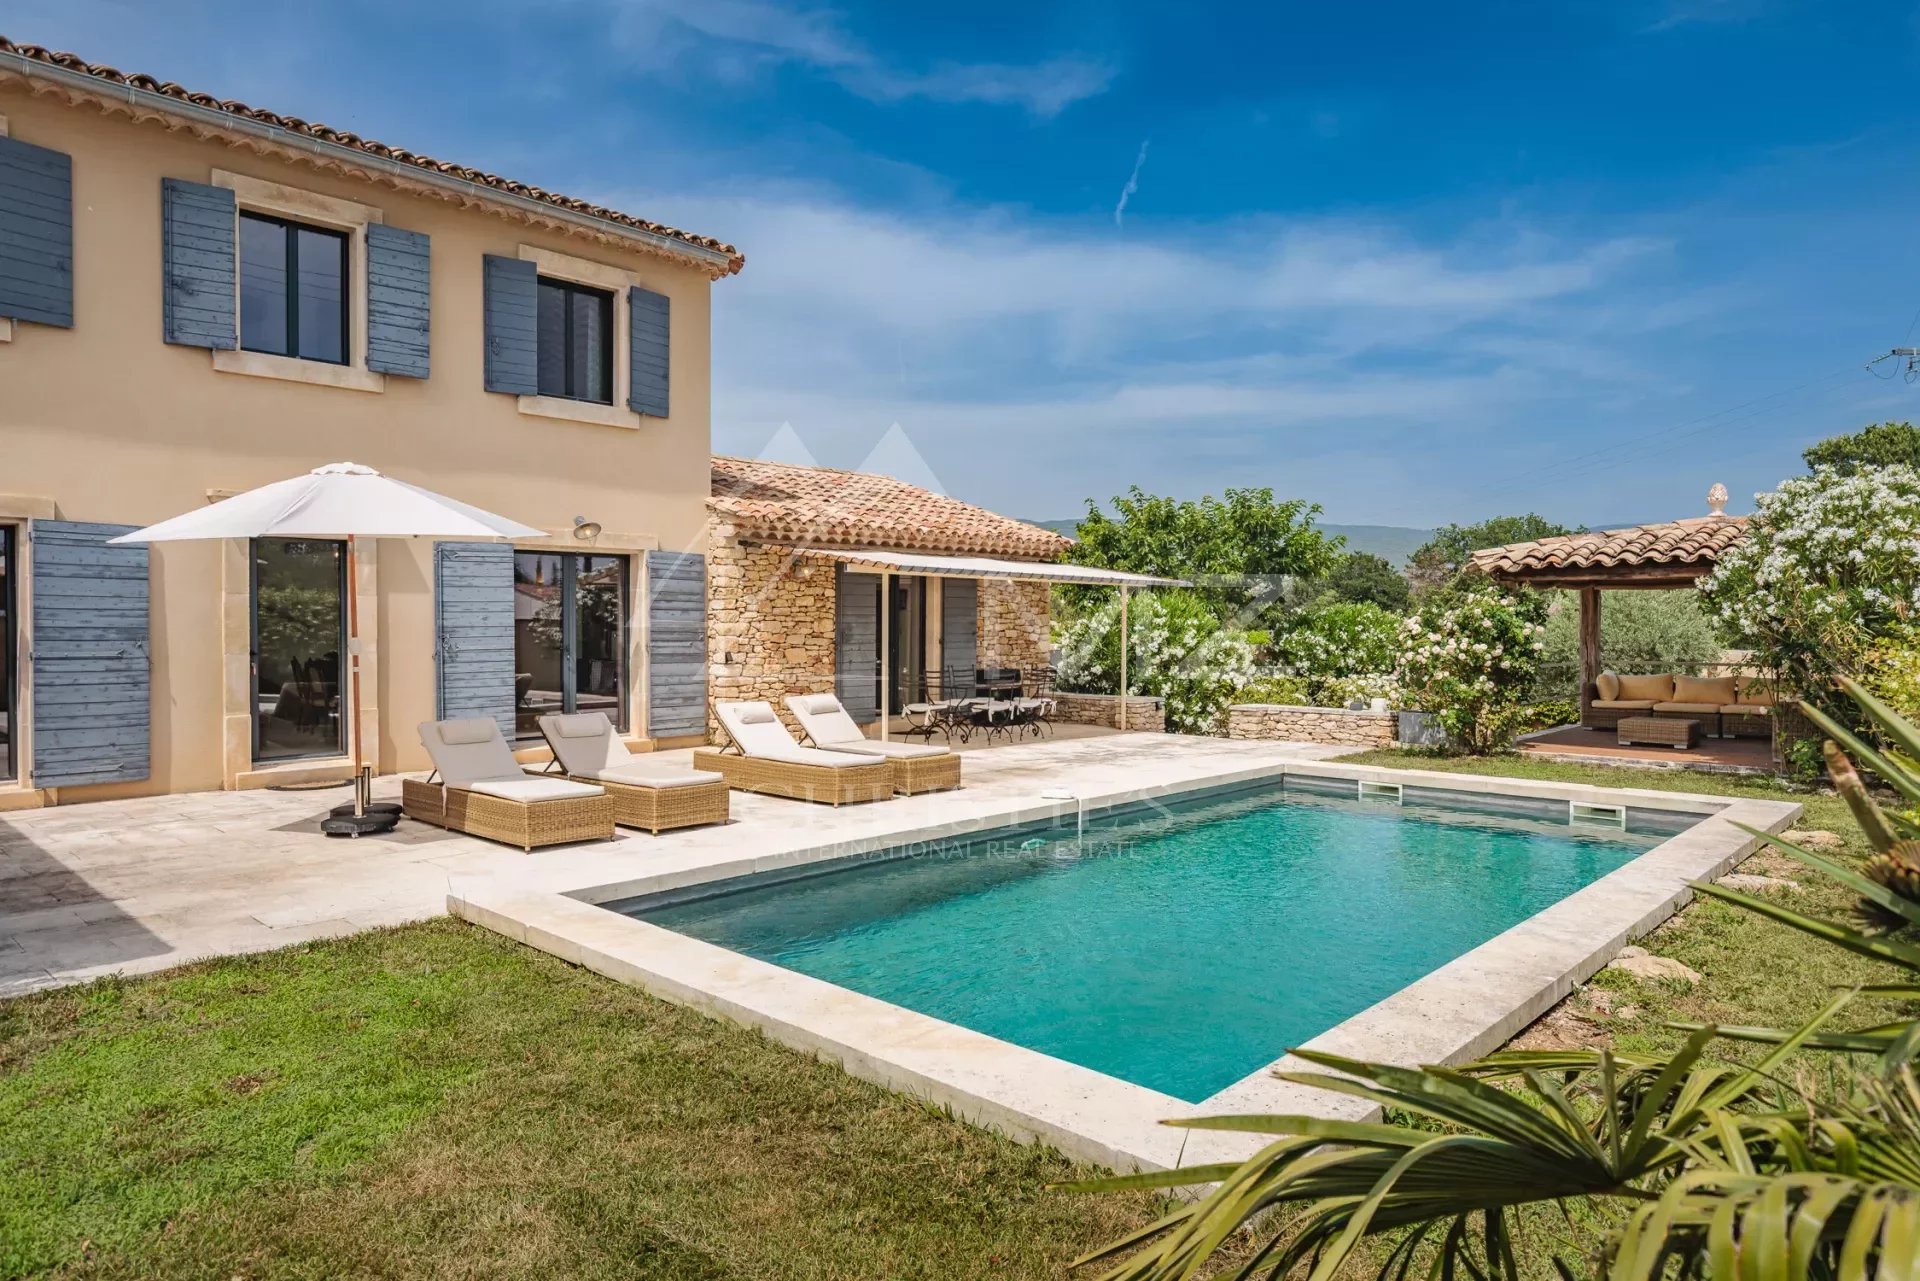 Luberon - Beautiful holiday home with heated pool